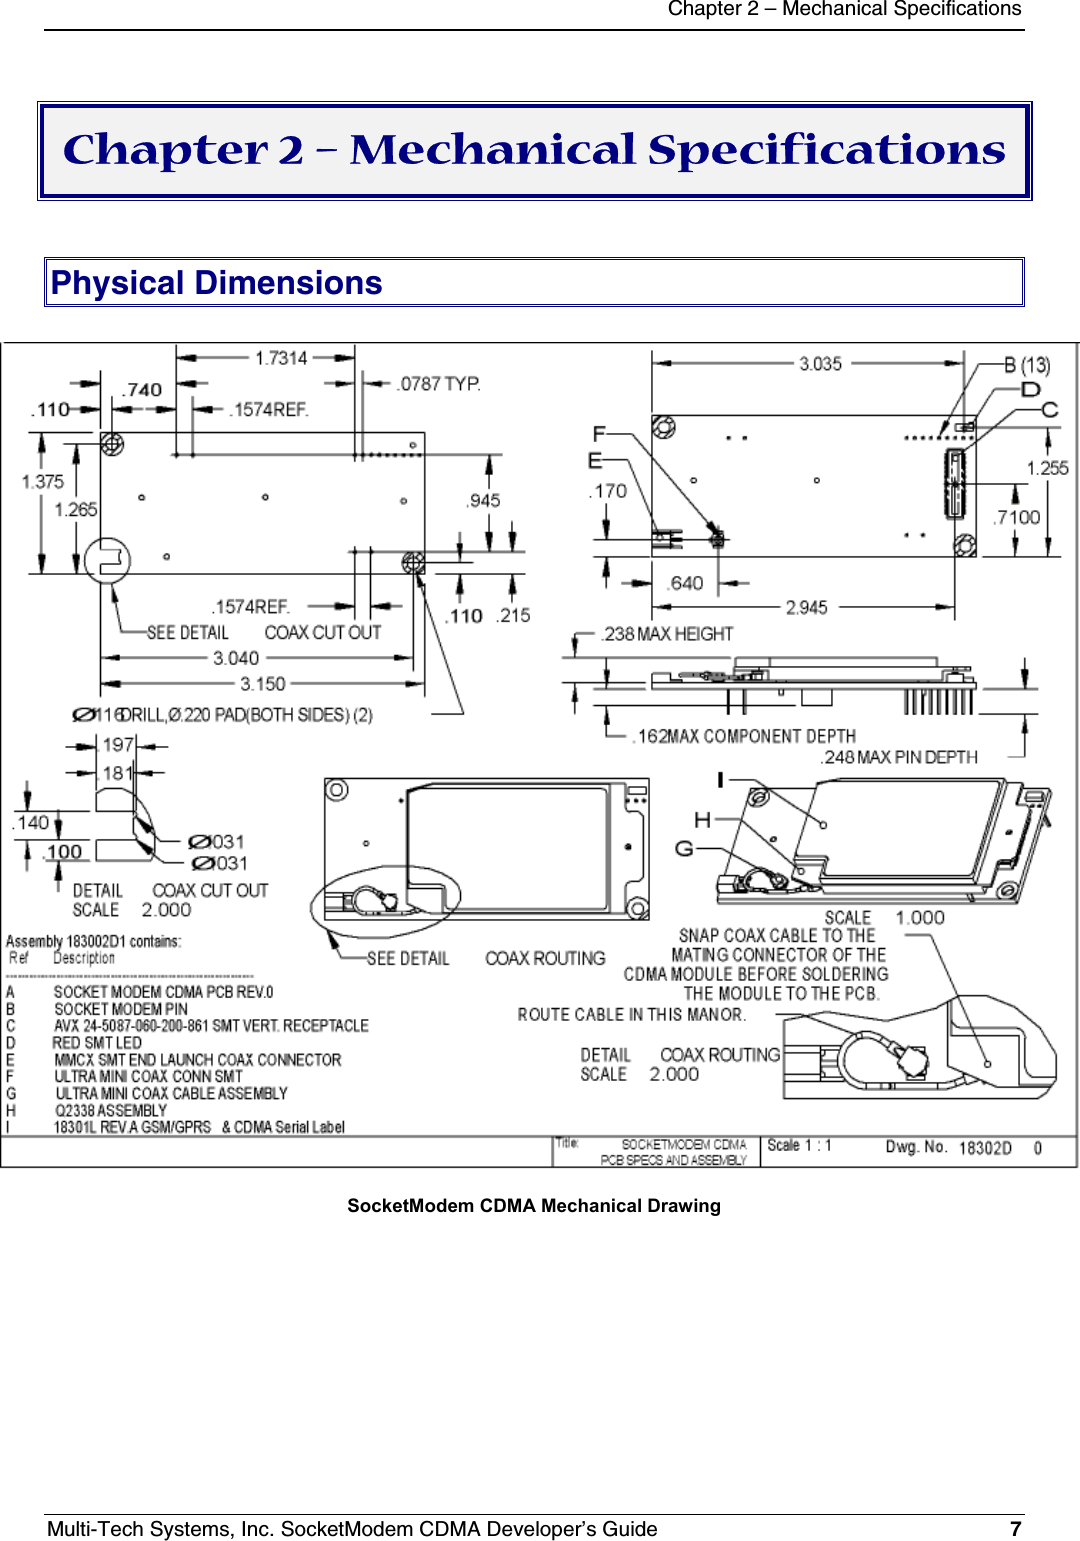 Chapter 2 – Mechanical SpecificationsMulti-Tech Systems, Inc. SocketModem CDMA Developer’s Guide 7Chapter 2 – Mechanical SpecificationsPhysical DimensionsSocketModem CDMA Mechanical Drawing